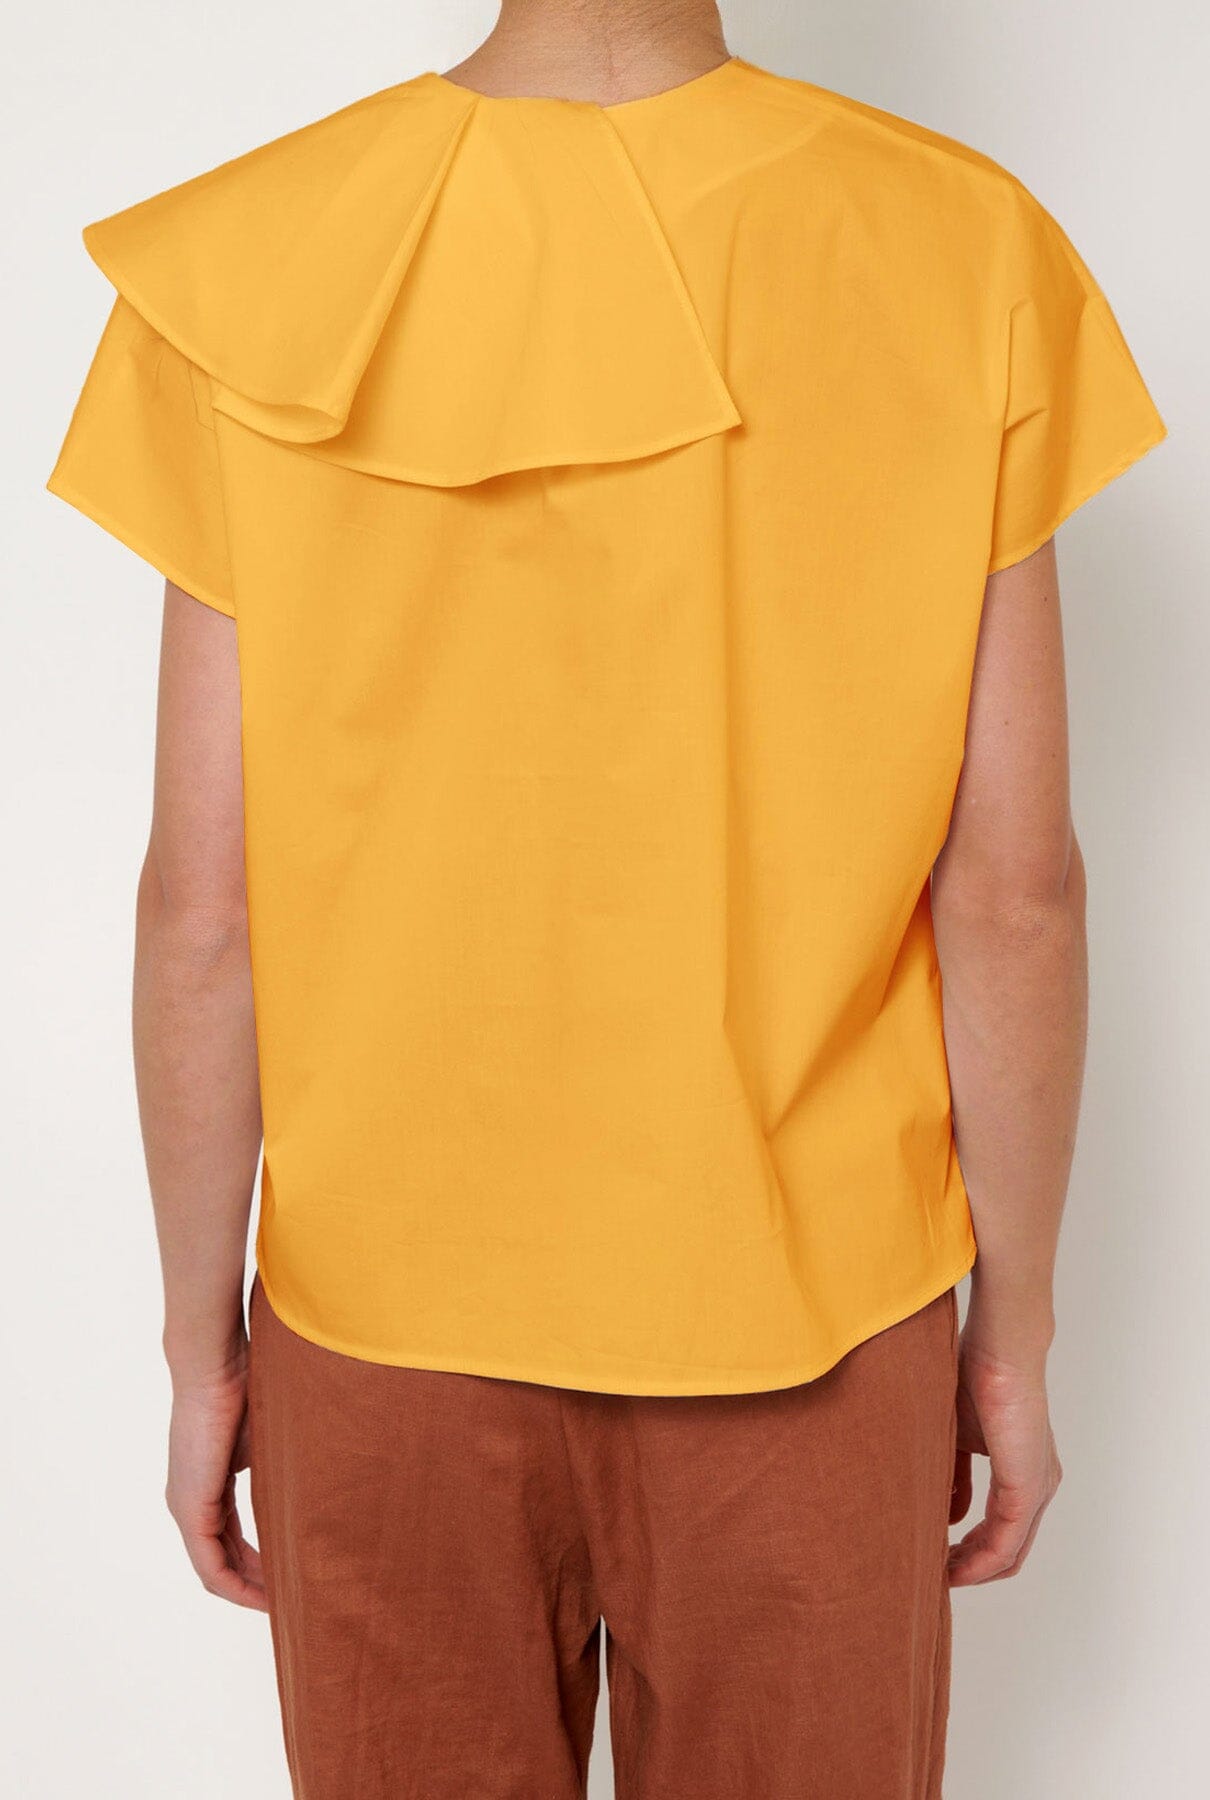 Camisa Valentina Naranja Shirts & blouses Iki Essentials 